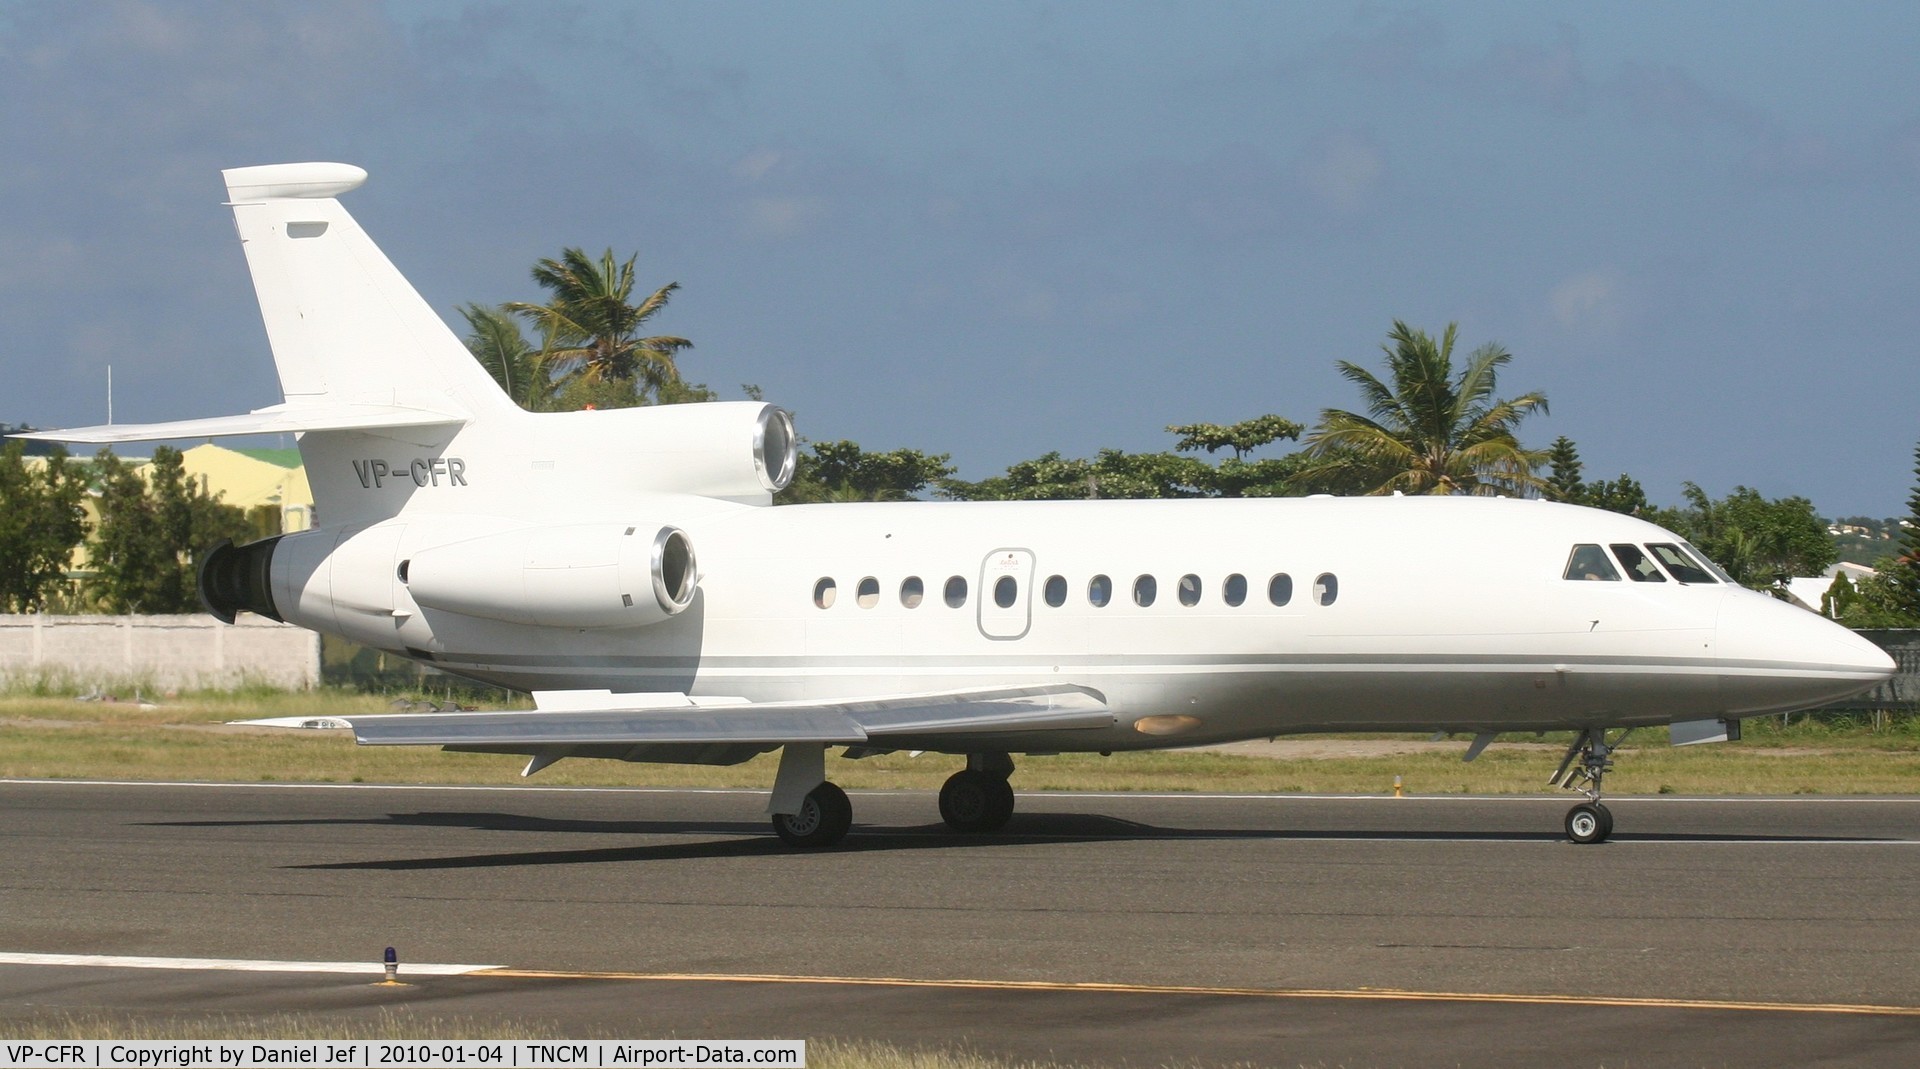 VP-CFR, 2004 Dassault Falcon 900EX C/N 134, VP-CFR just landed at TNCM